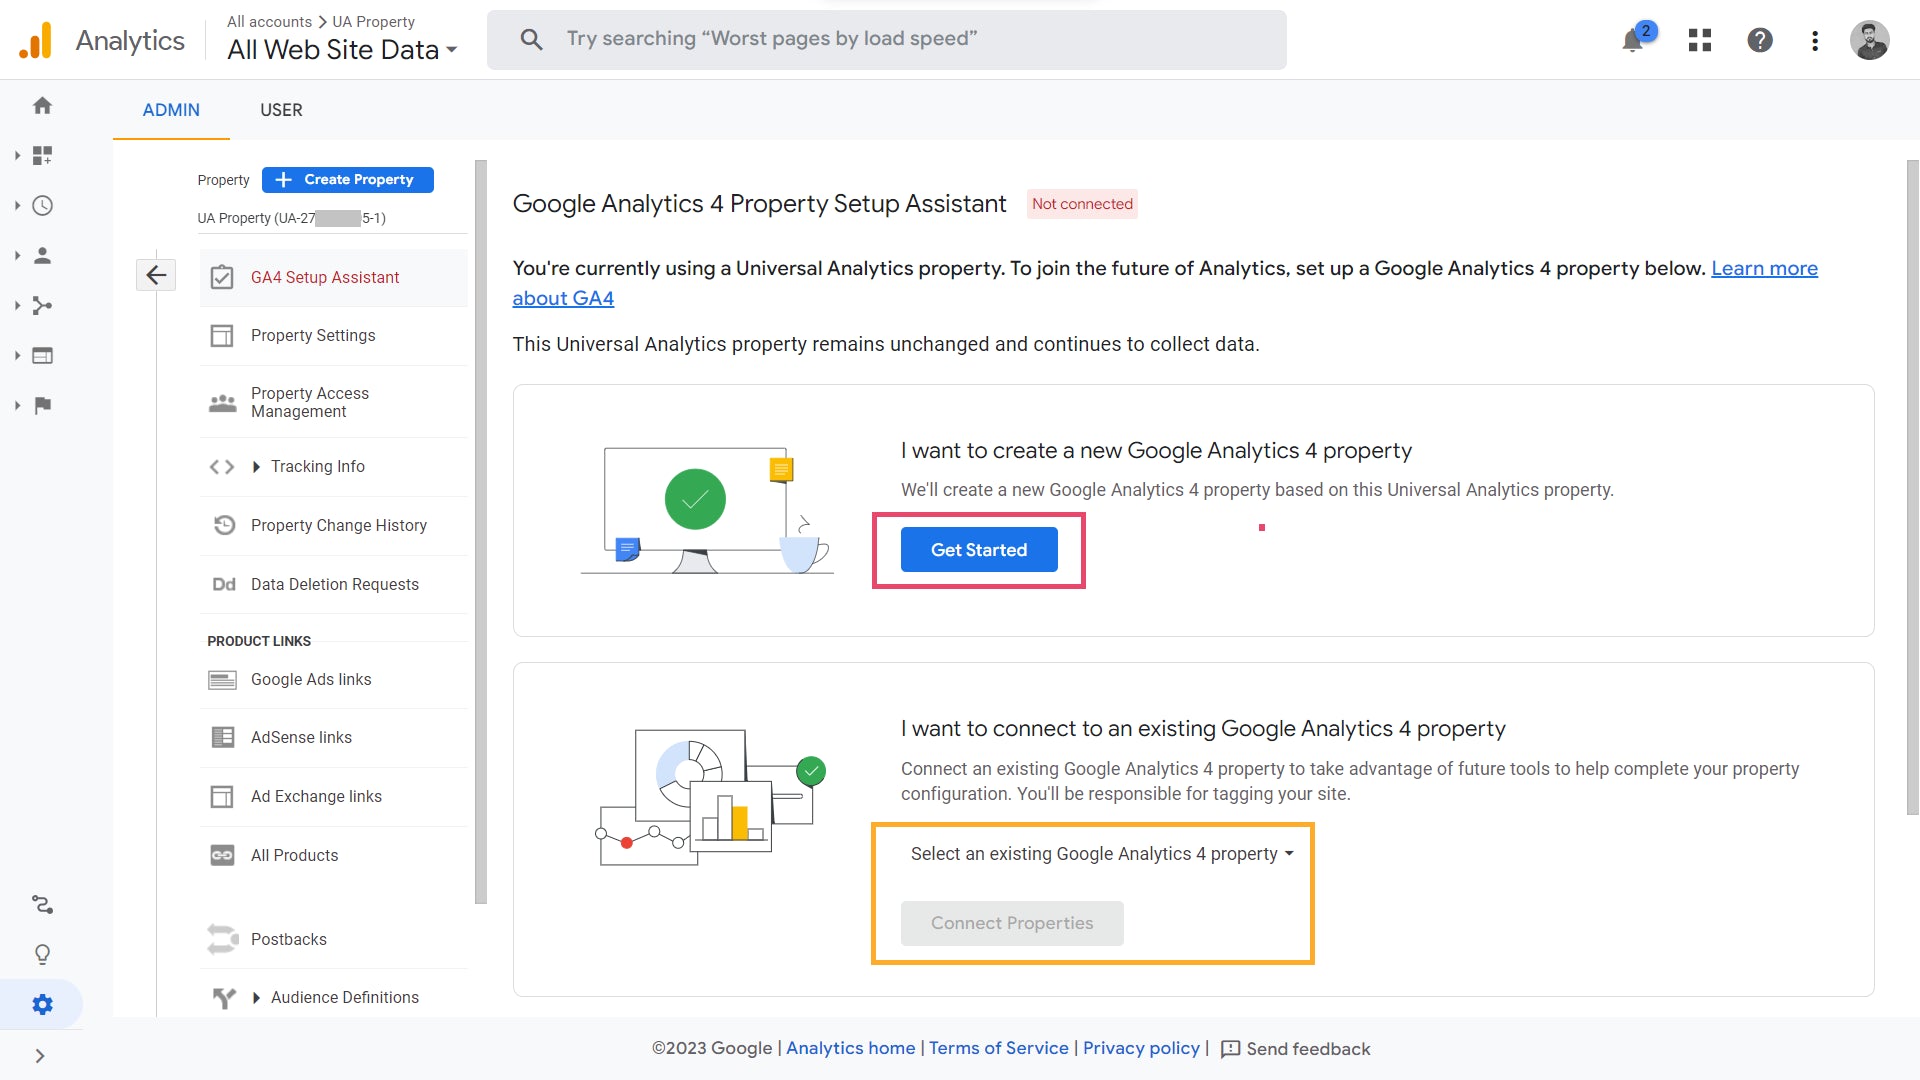 Google Analytics 4 Property Setup Assistant